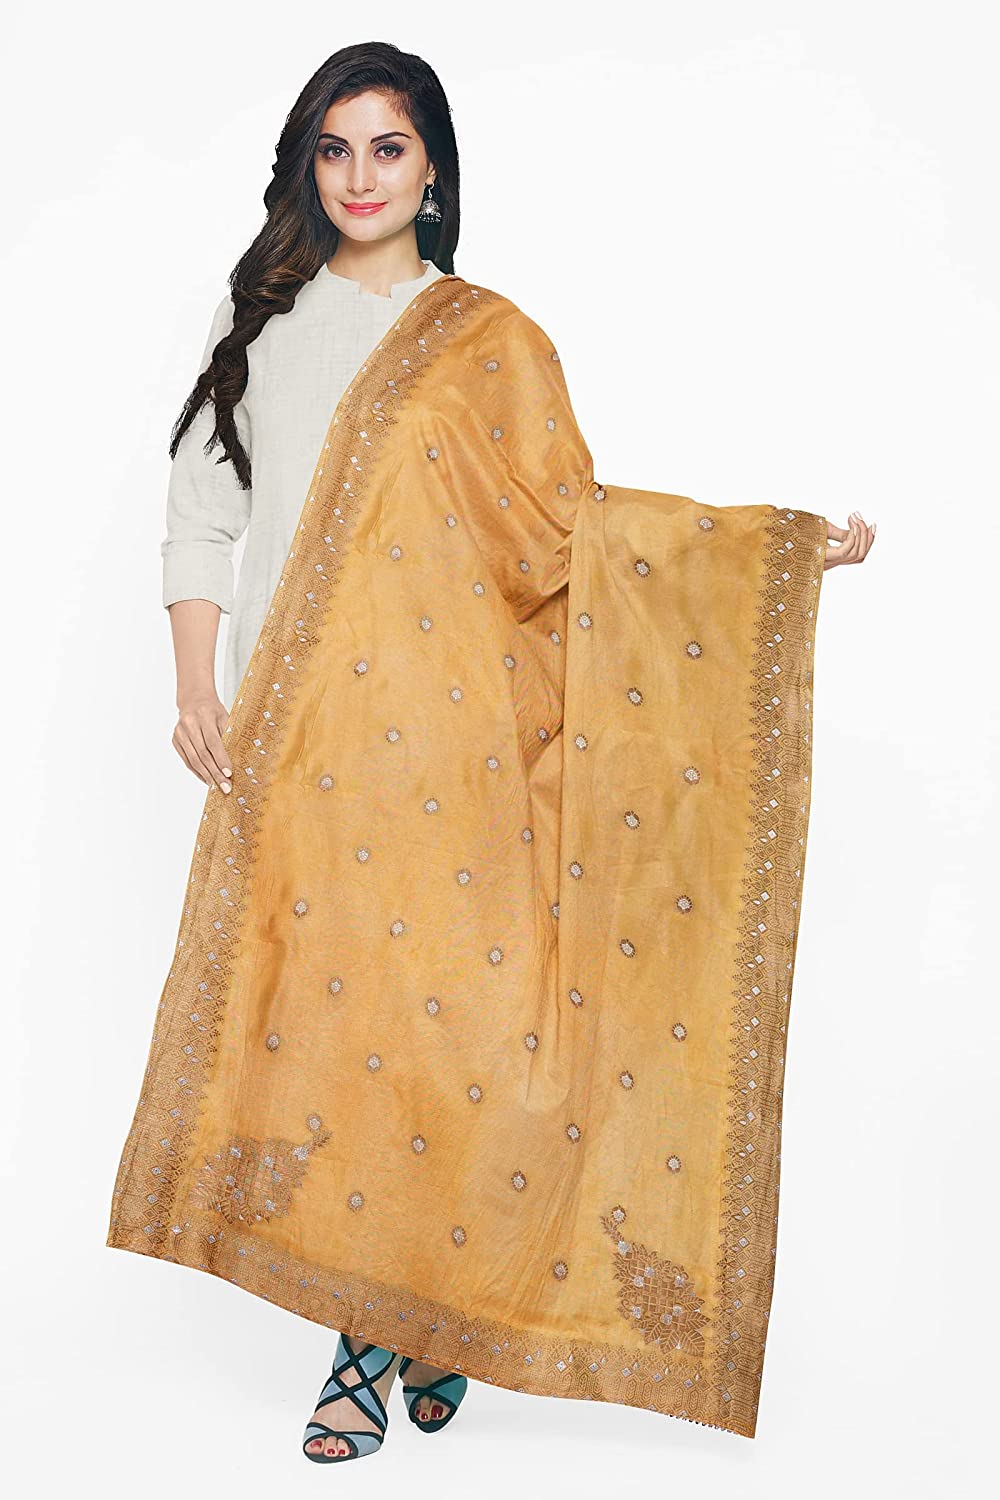 VOGZY.COM Designer Silk Dupatta With Plain Weave N Border For Women Free Size, Mustard Yellow Color